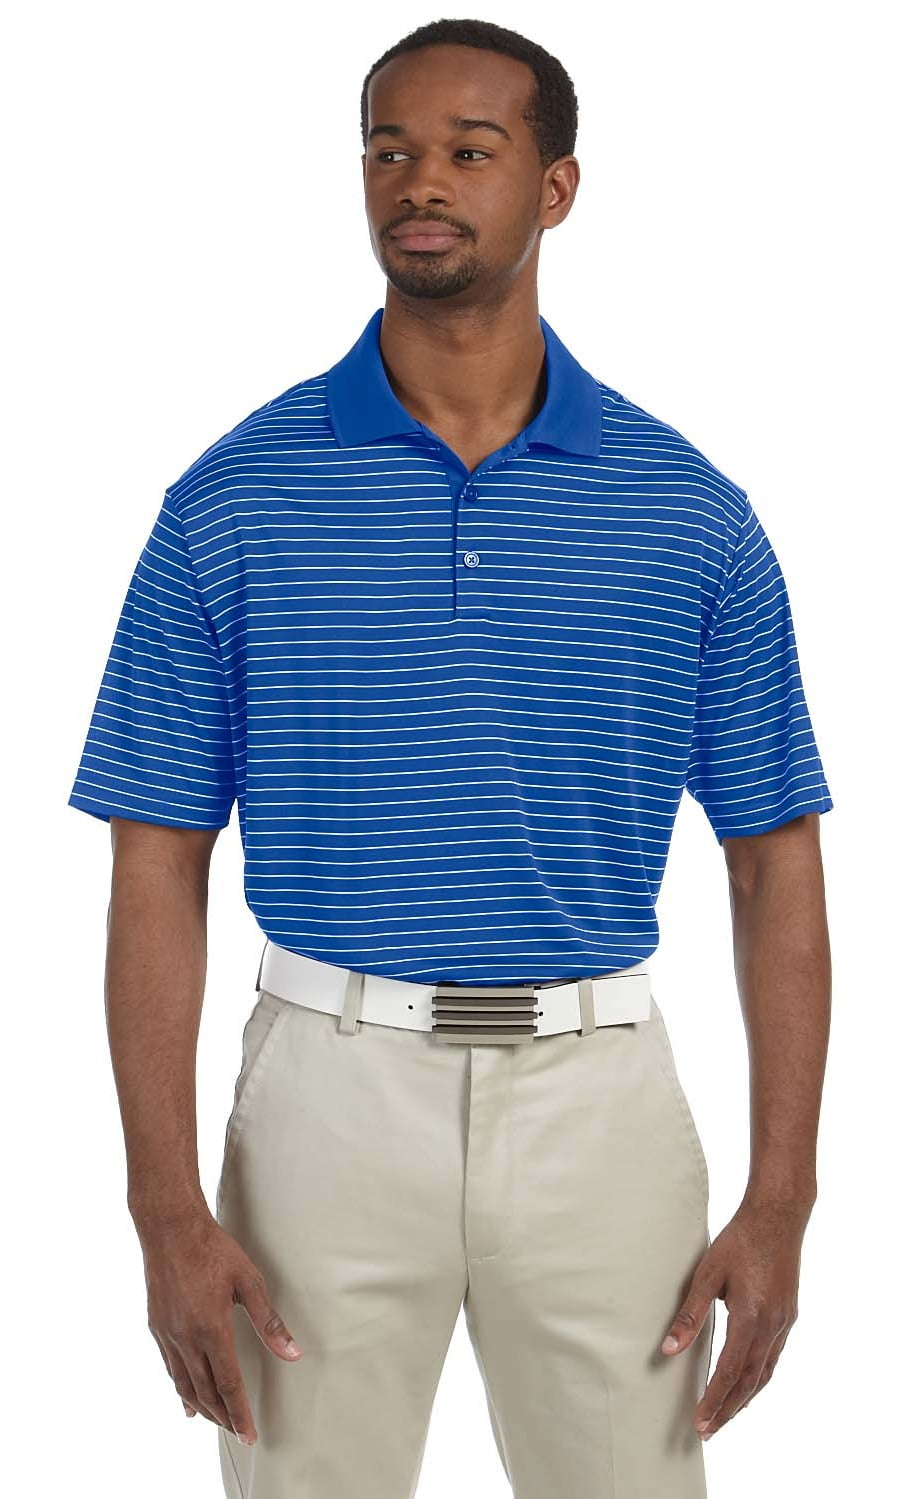 Adidas A145 Men's Golf Heather Colorblock Polo - Small - Walmart.com